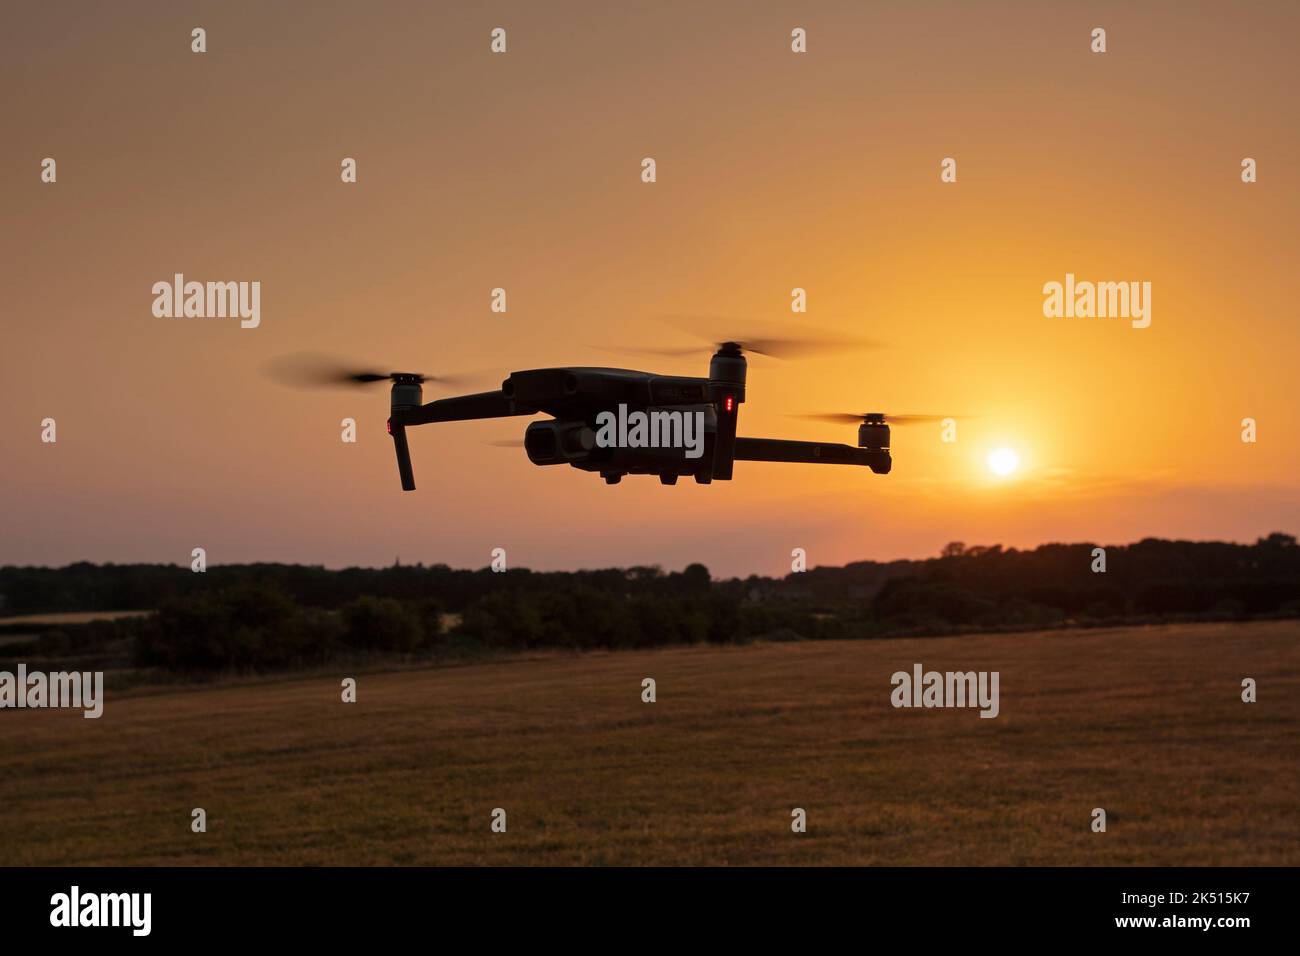 Mavic DJI Drohne fliegt bei Sonnenuntergang Stockfoto